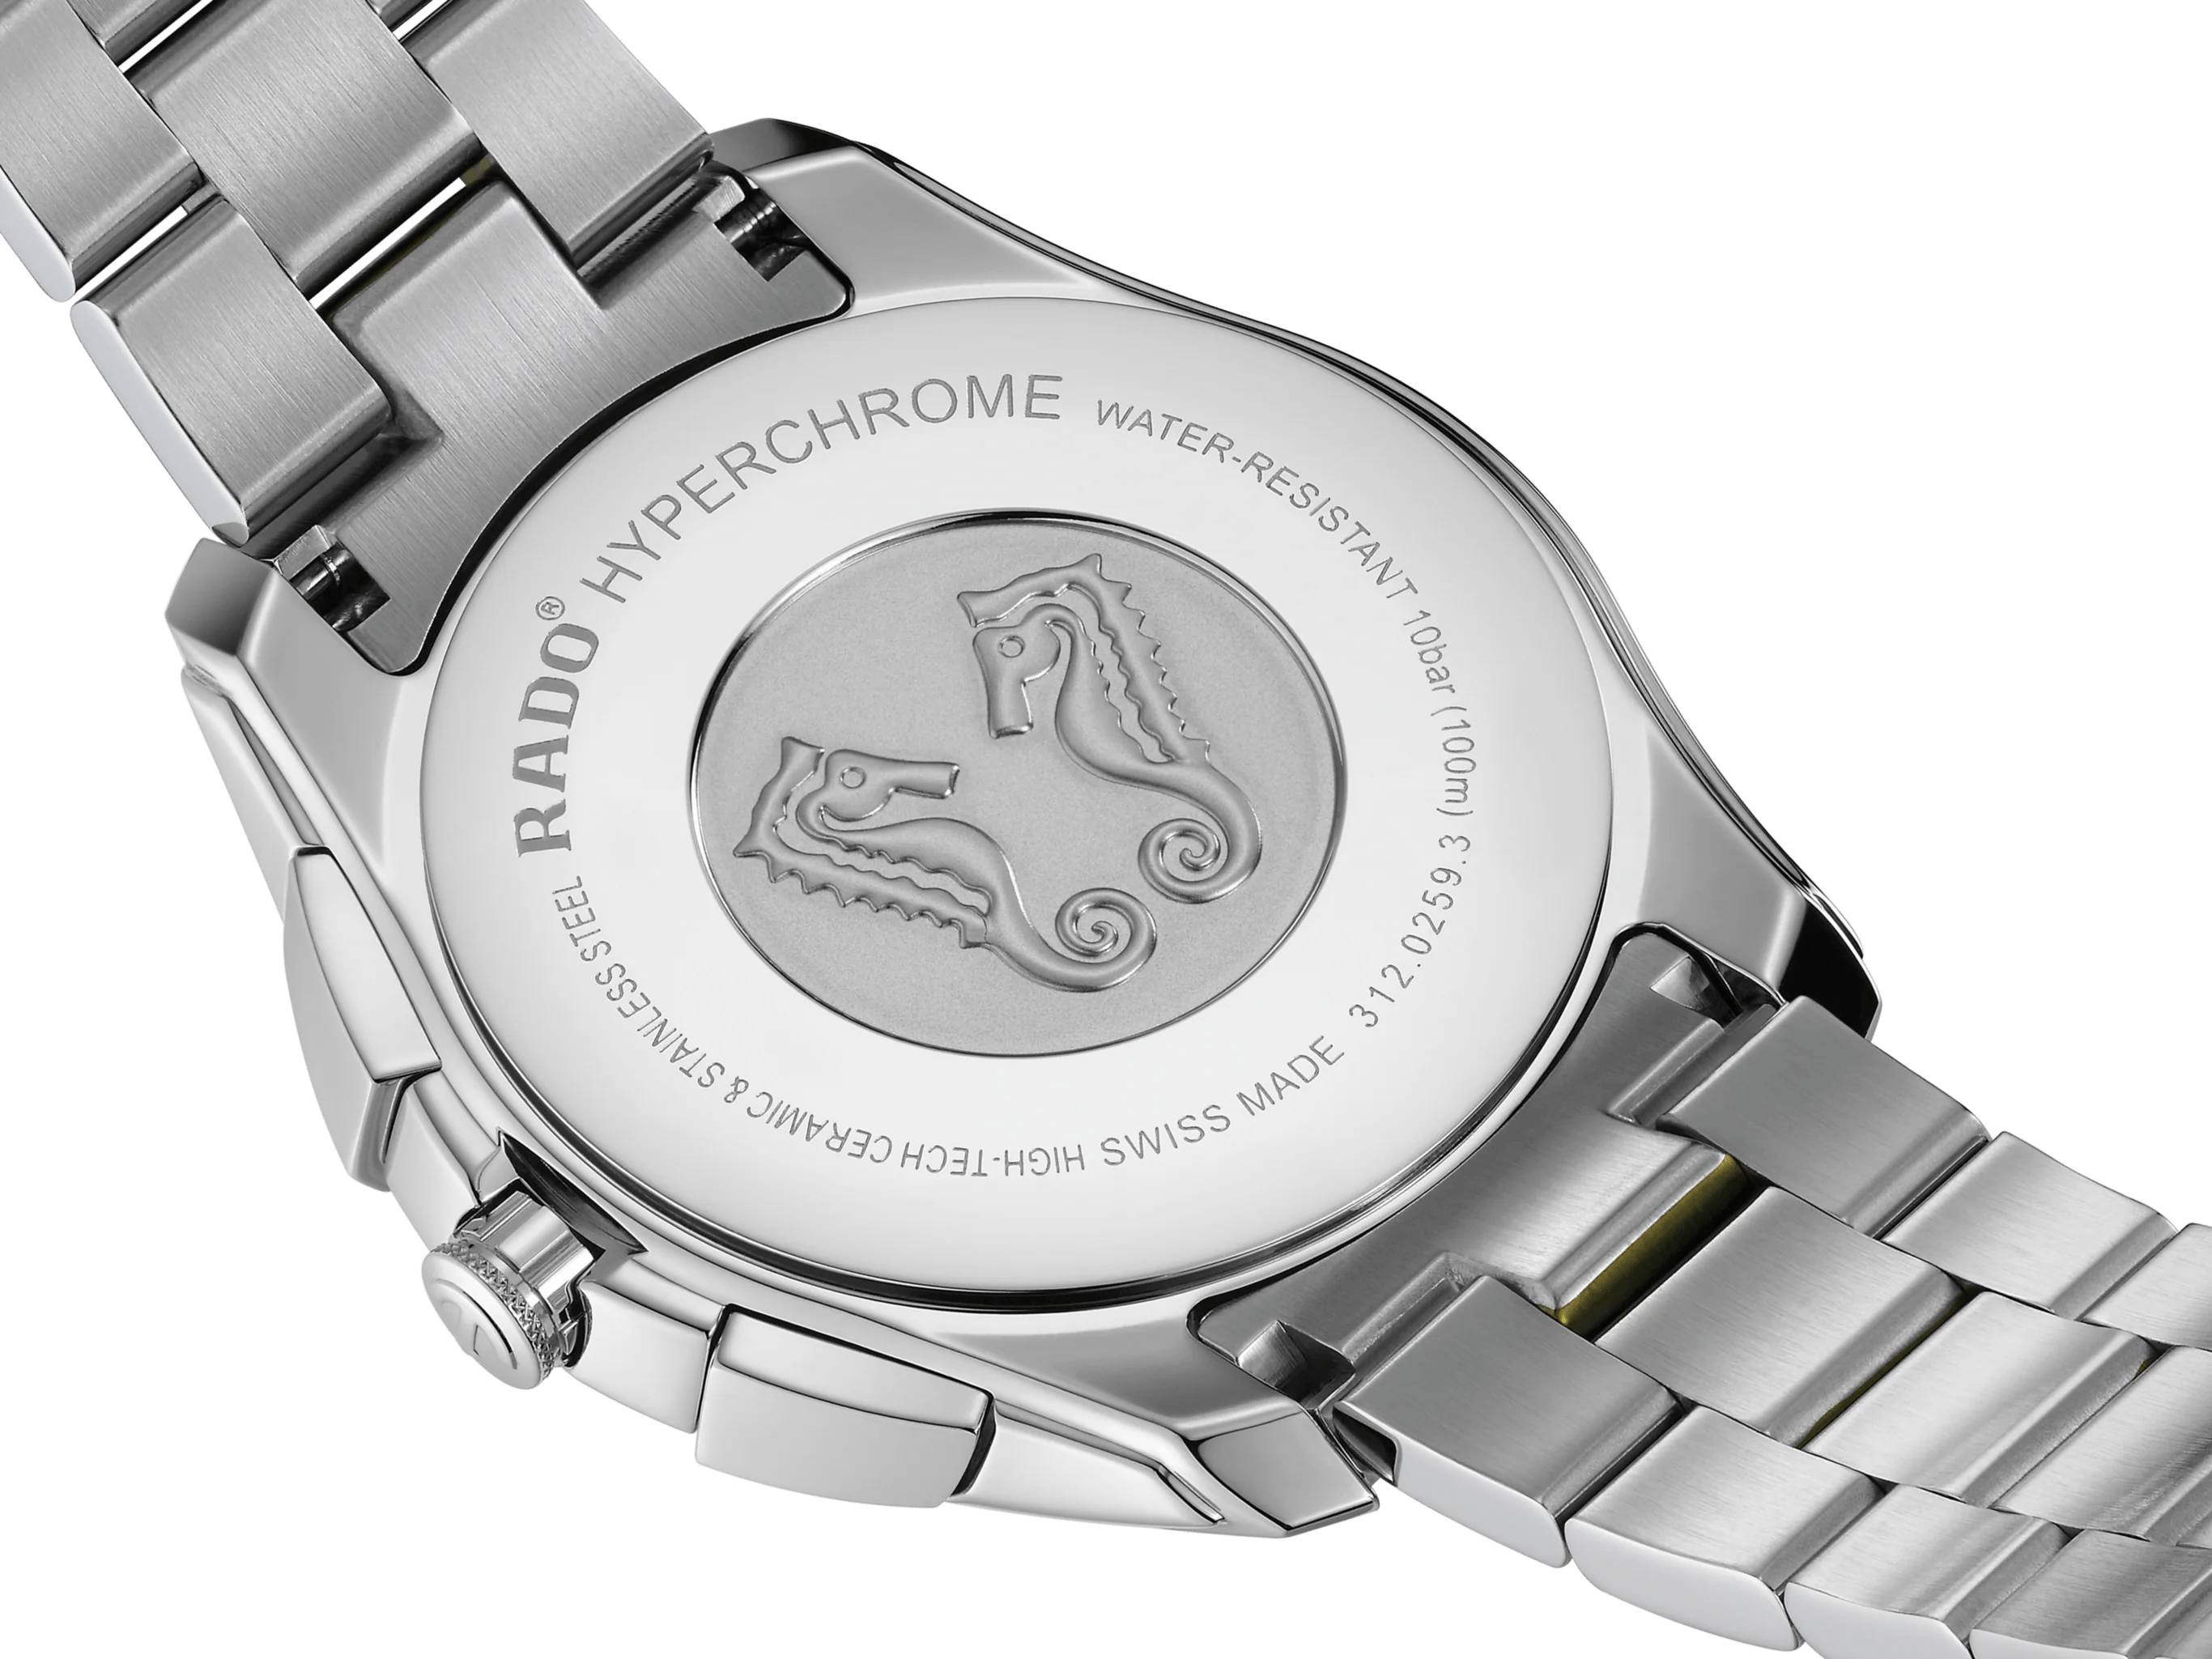 Rado HyperChrome Chronograph Green Dial Men's Watch R32259323